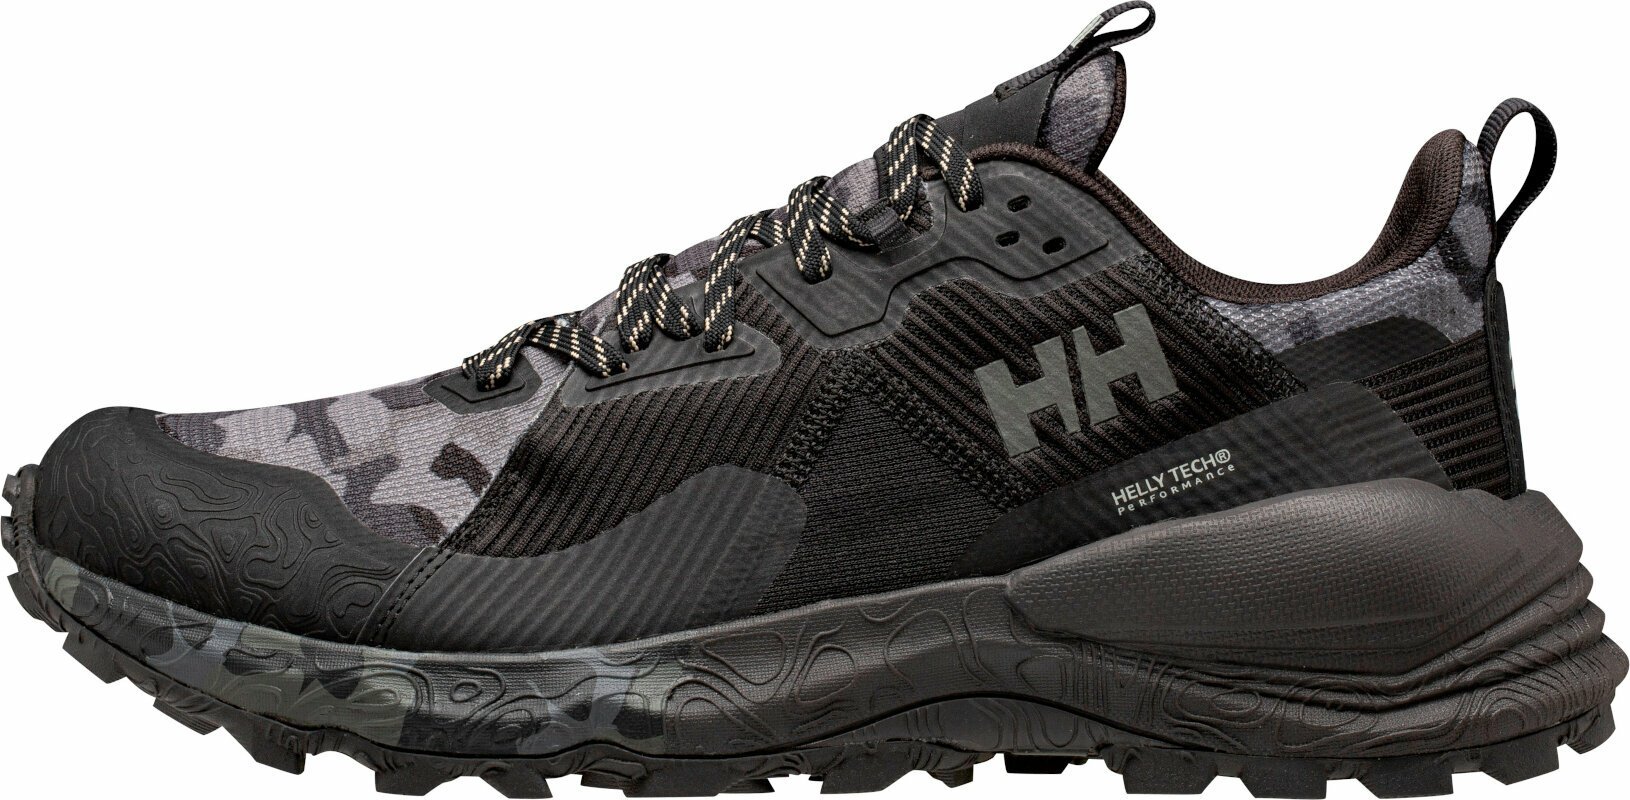 Chaussures de trail running Helly Hansen Men's Hawk Stapro Trail Running High Top Shoes  Black/Phantom Ebony 42 Chaussures de trail running